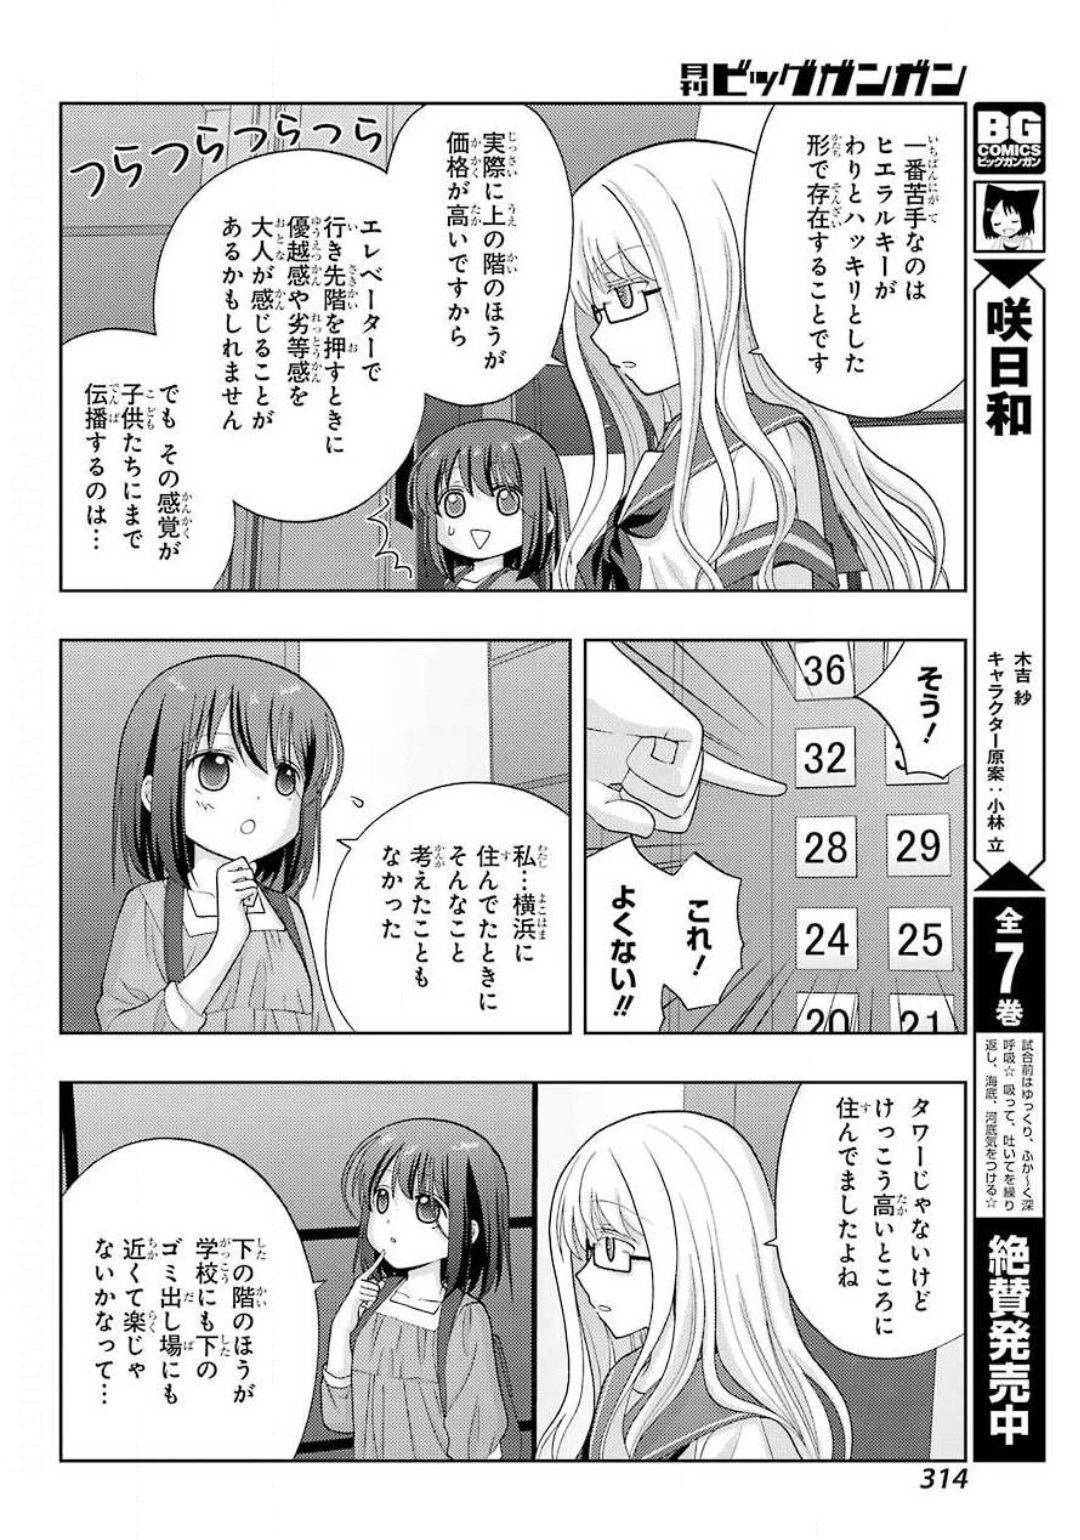 Shinohayu - The Dawn of Age Manga - Chapter 079 - Page 4